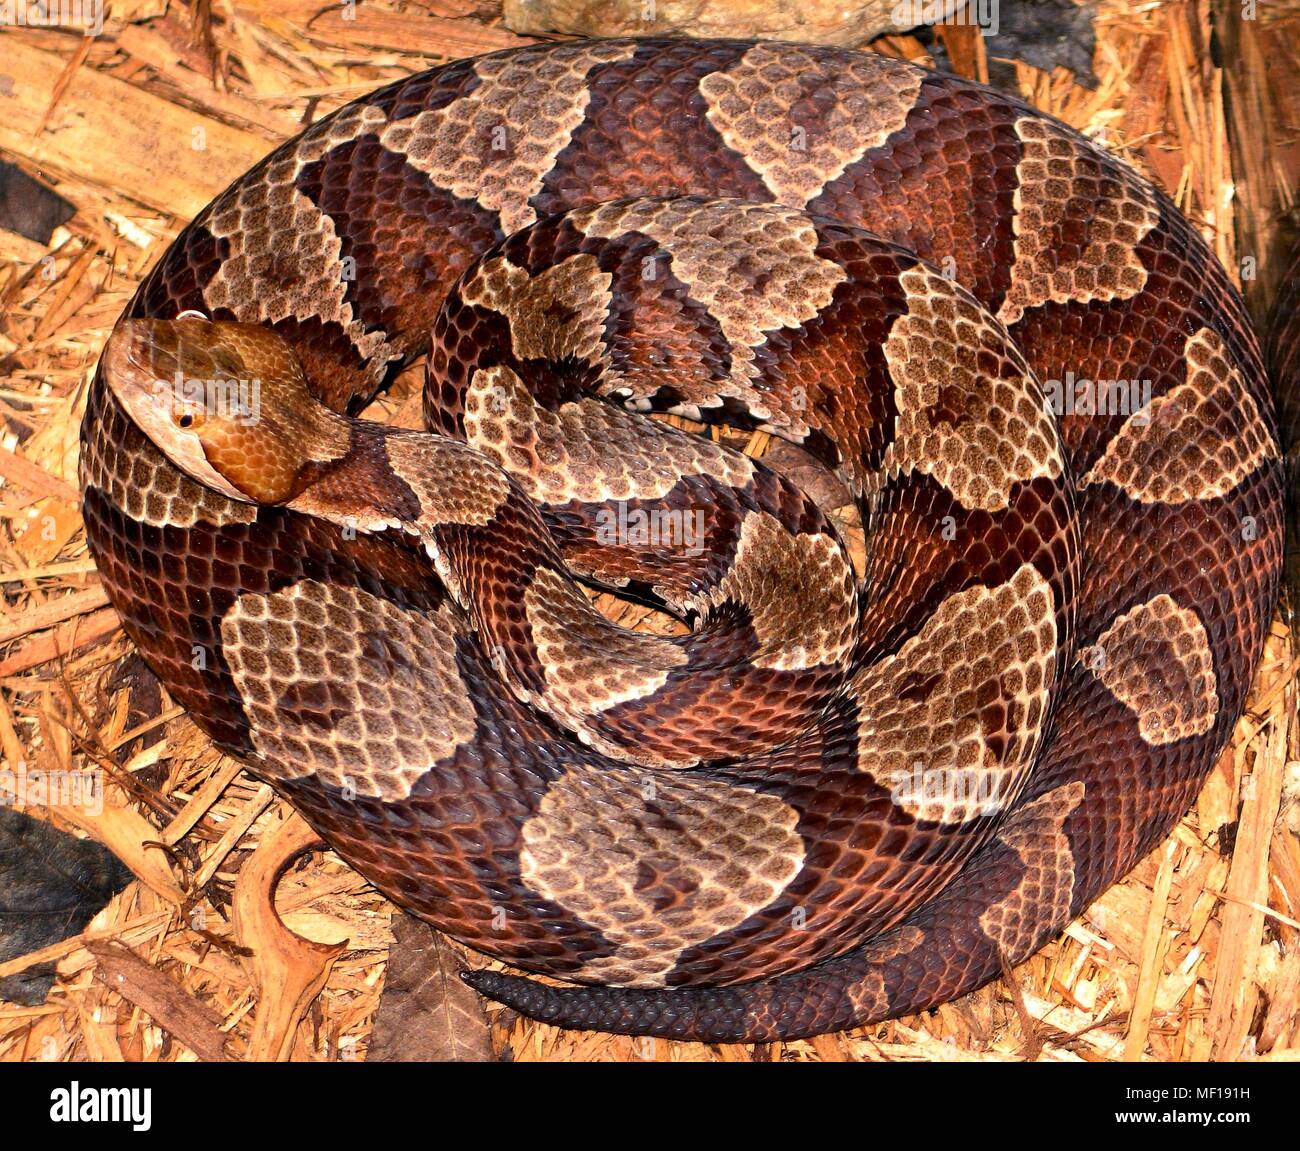 Northern copperhead snake (Agkistrodon contortrix mokasen), 2005. Mit freundlicher Seuchenkontrollzentren (CDC)/Edward J. Wozniak. () Stockfoto